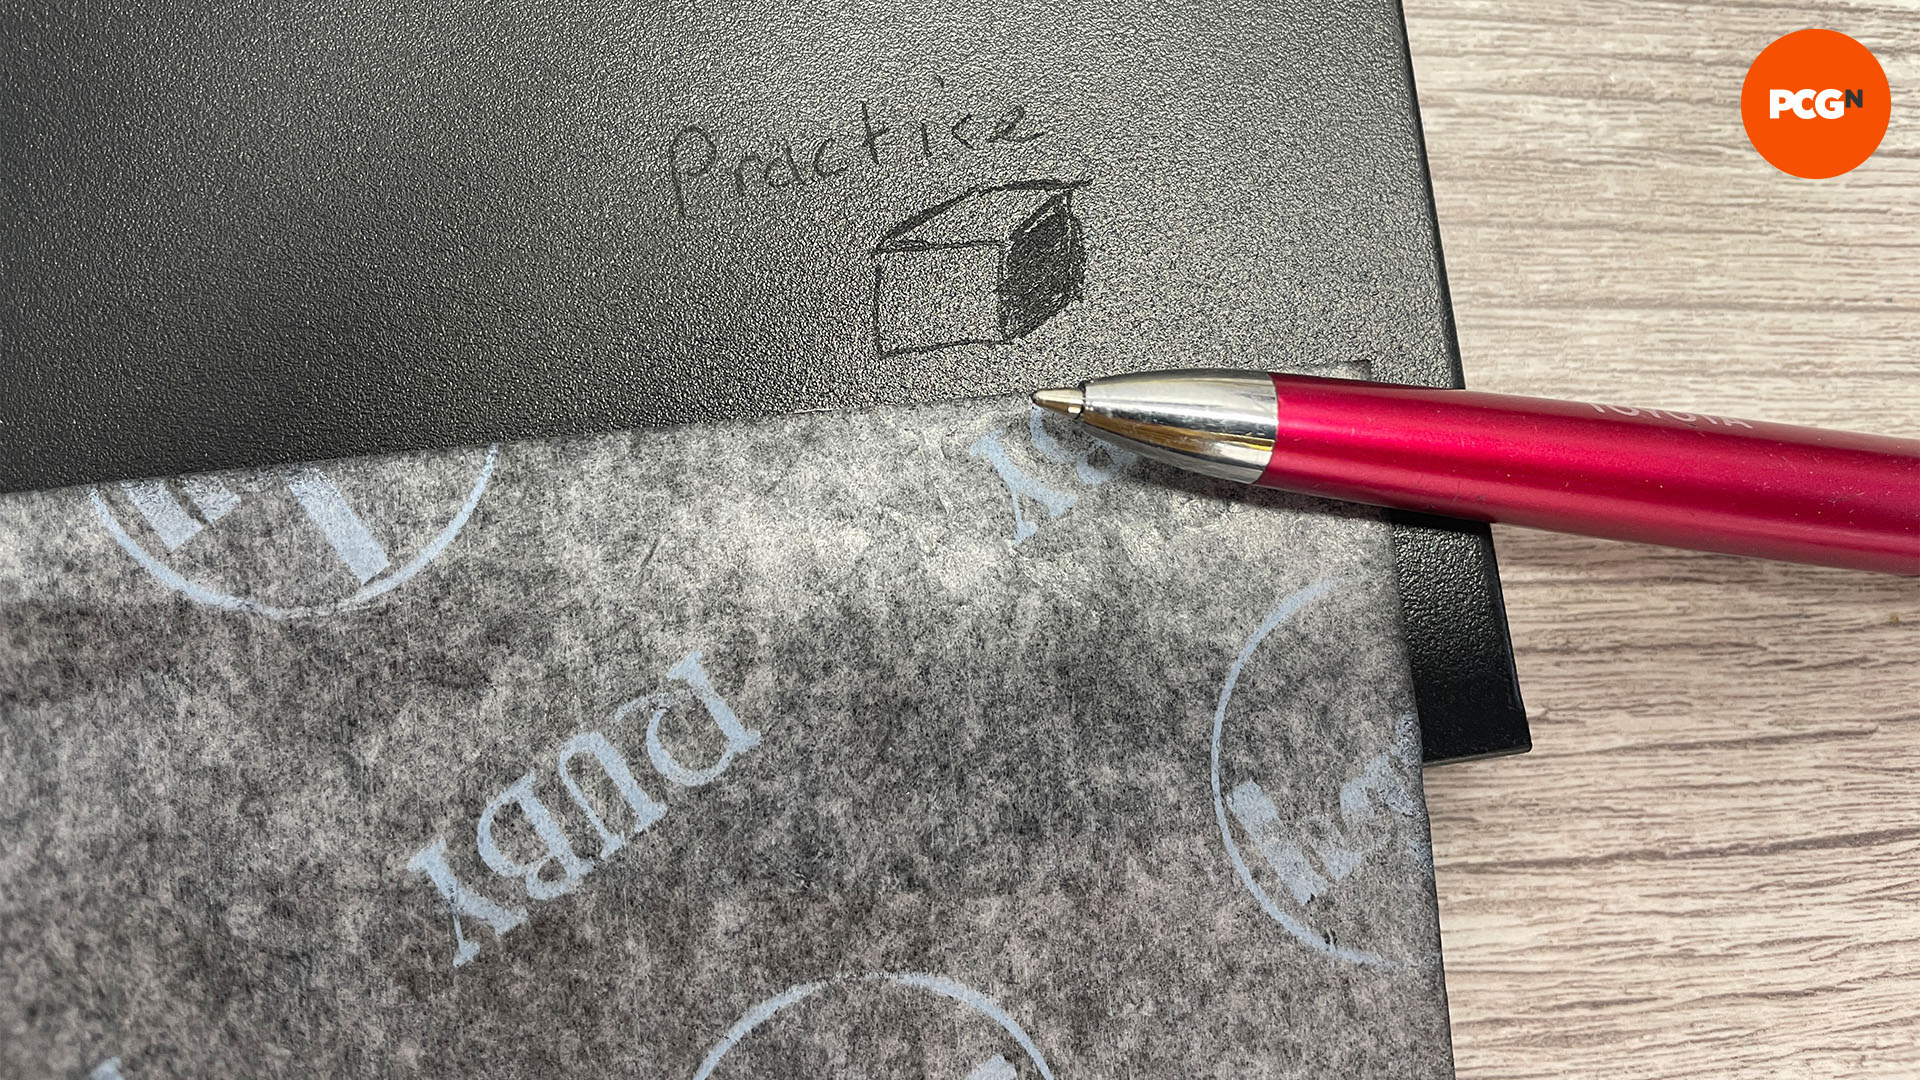 How to engrave your PC case: Carbon copy paper practice